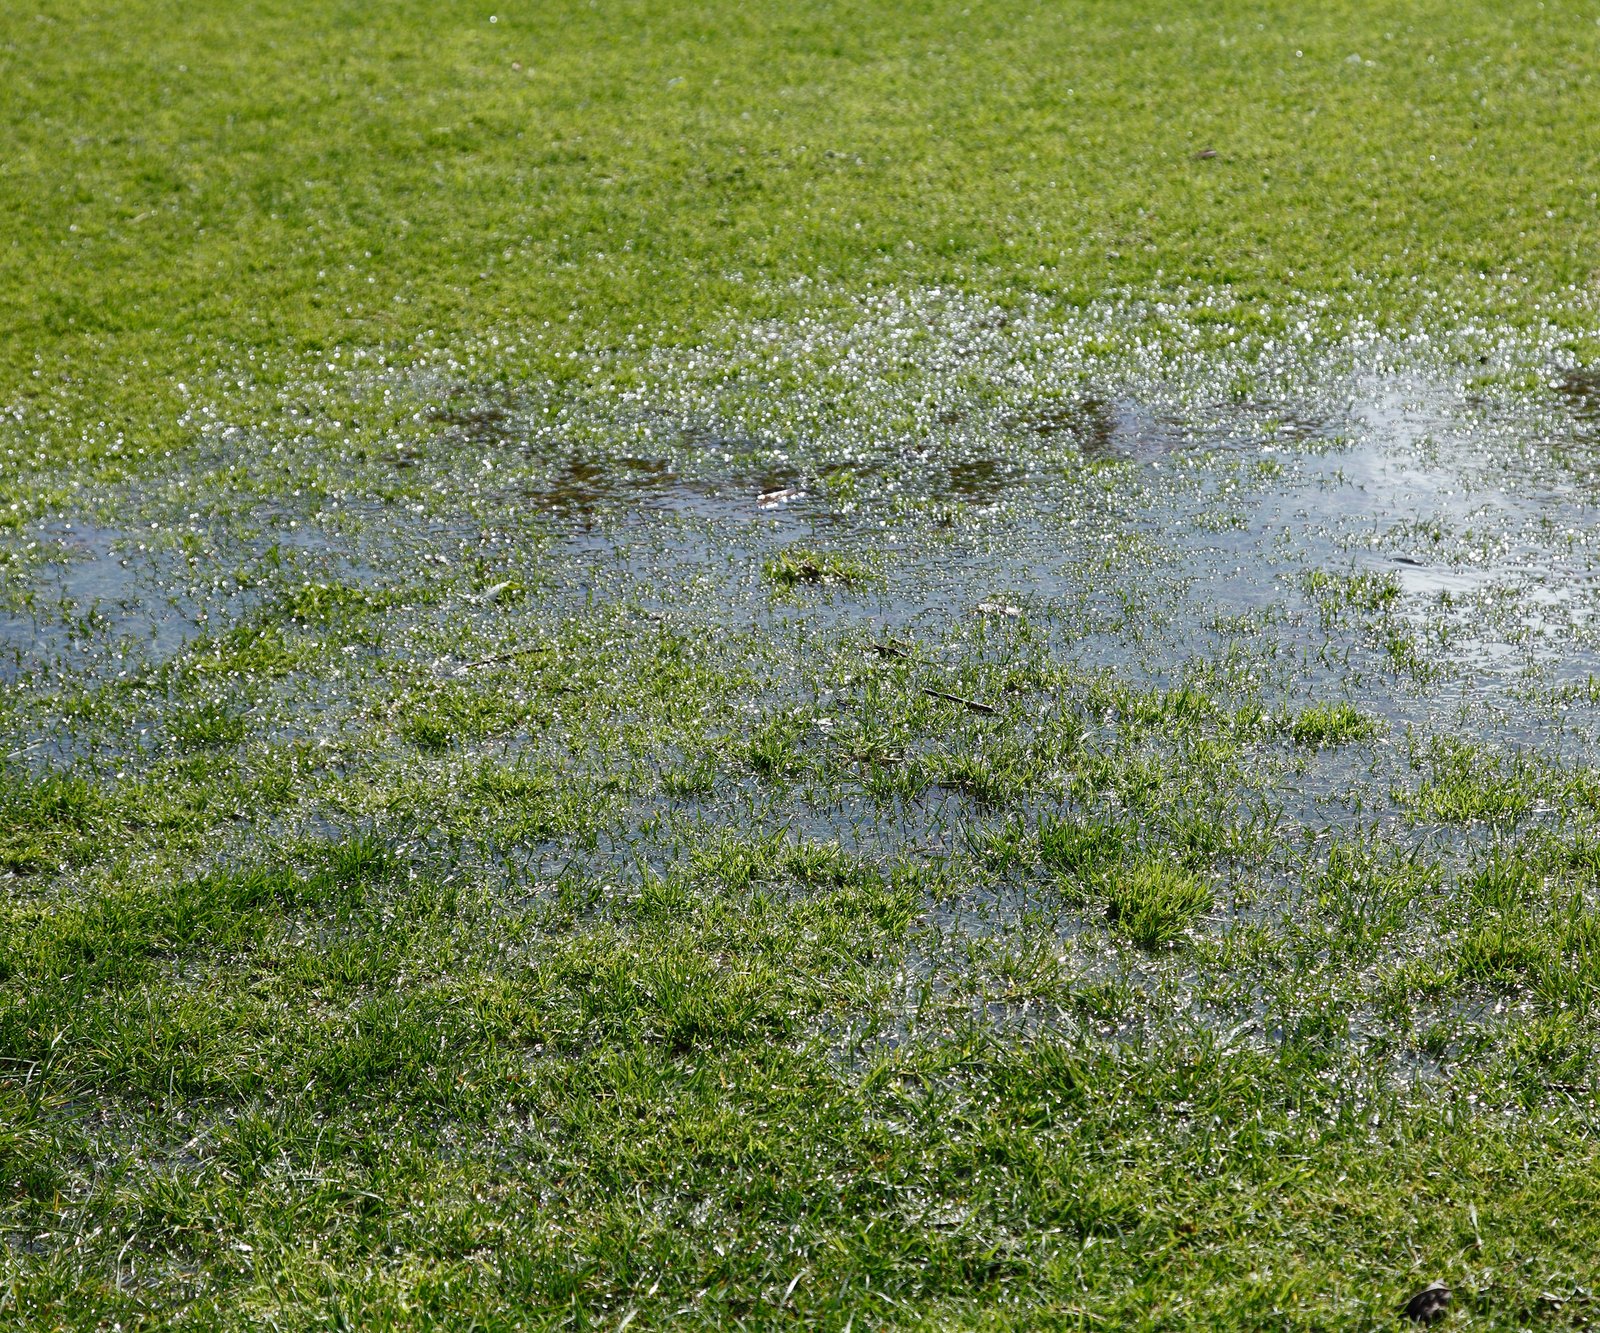 A closeup of a waterlogged lawn